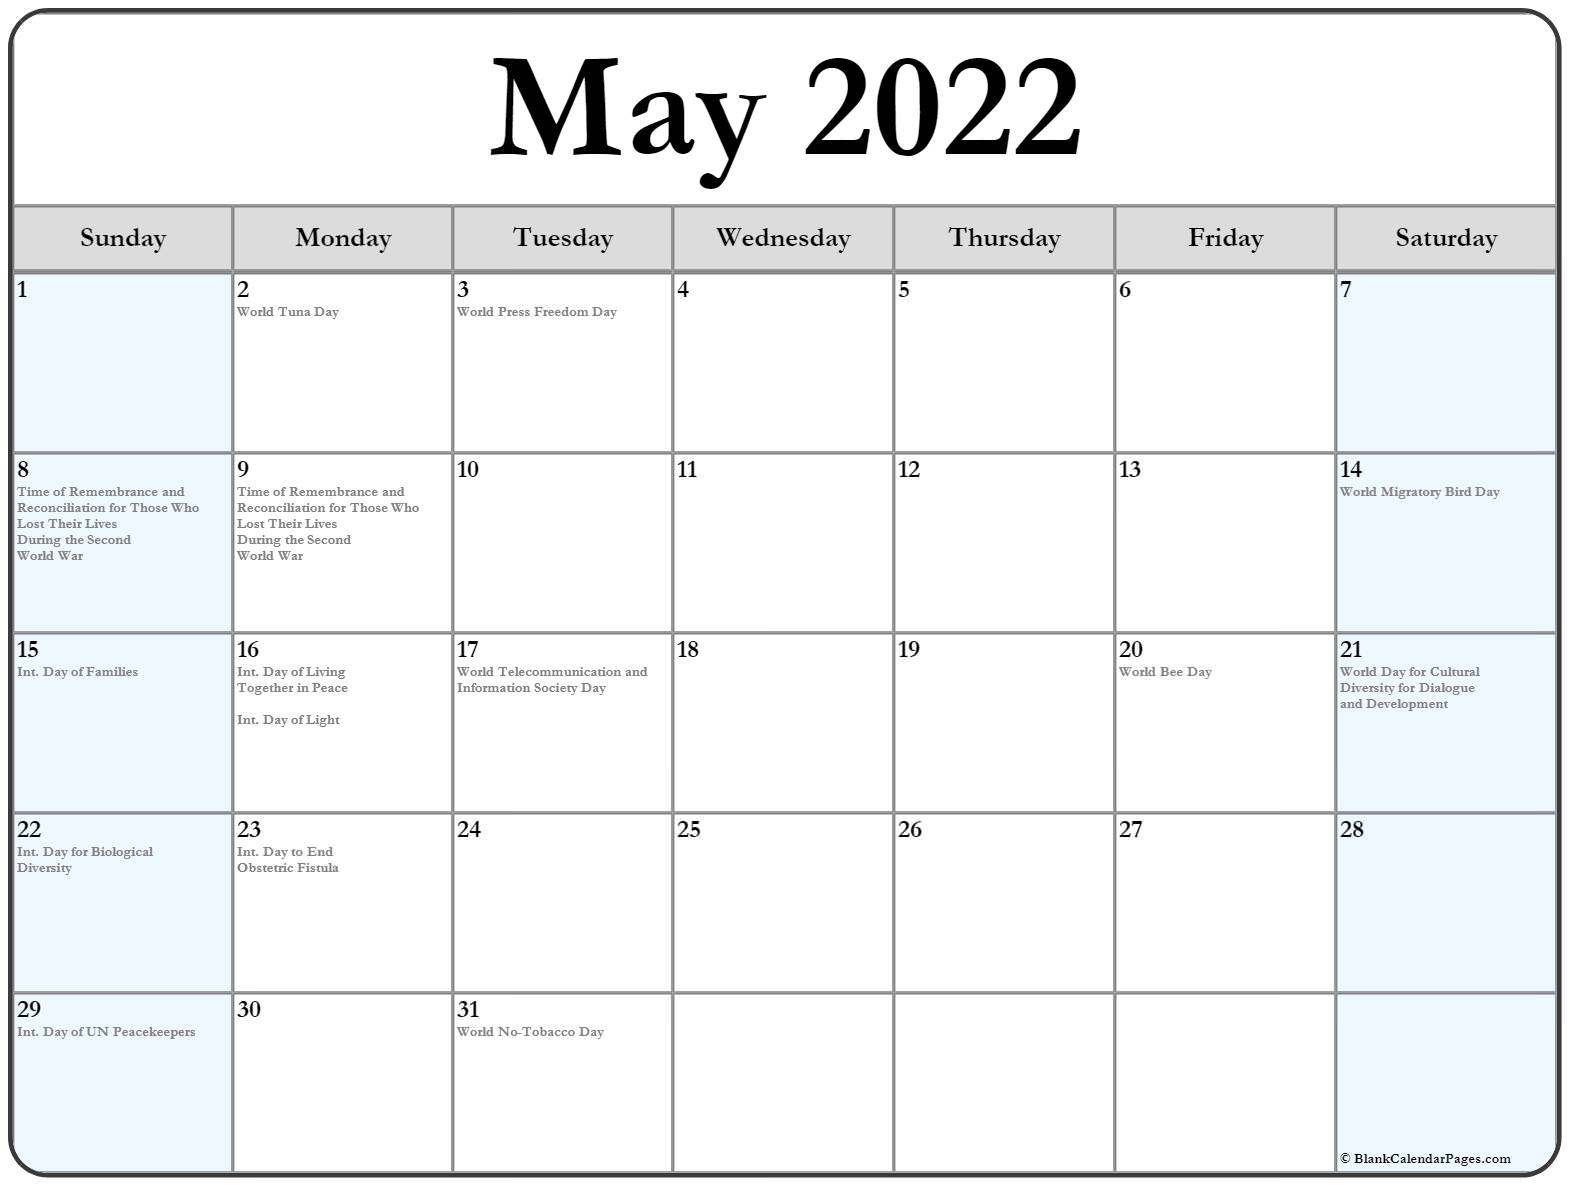 Get January 2022 Calendar Events